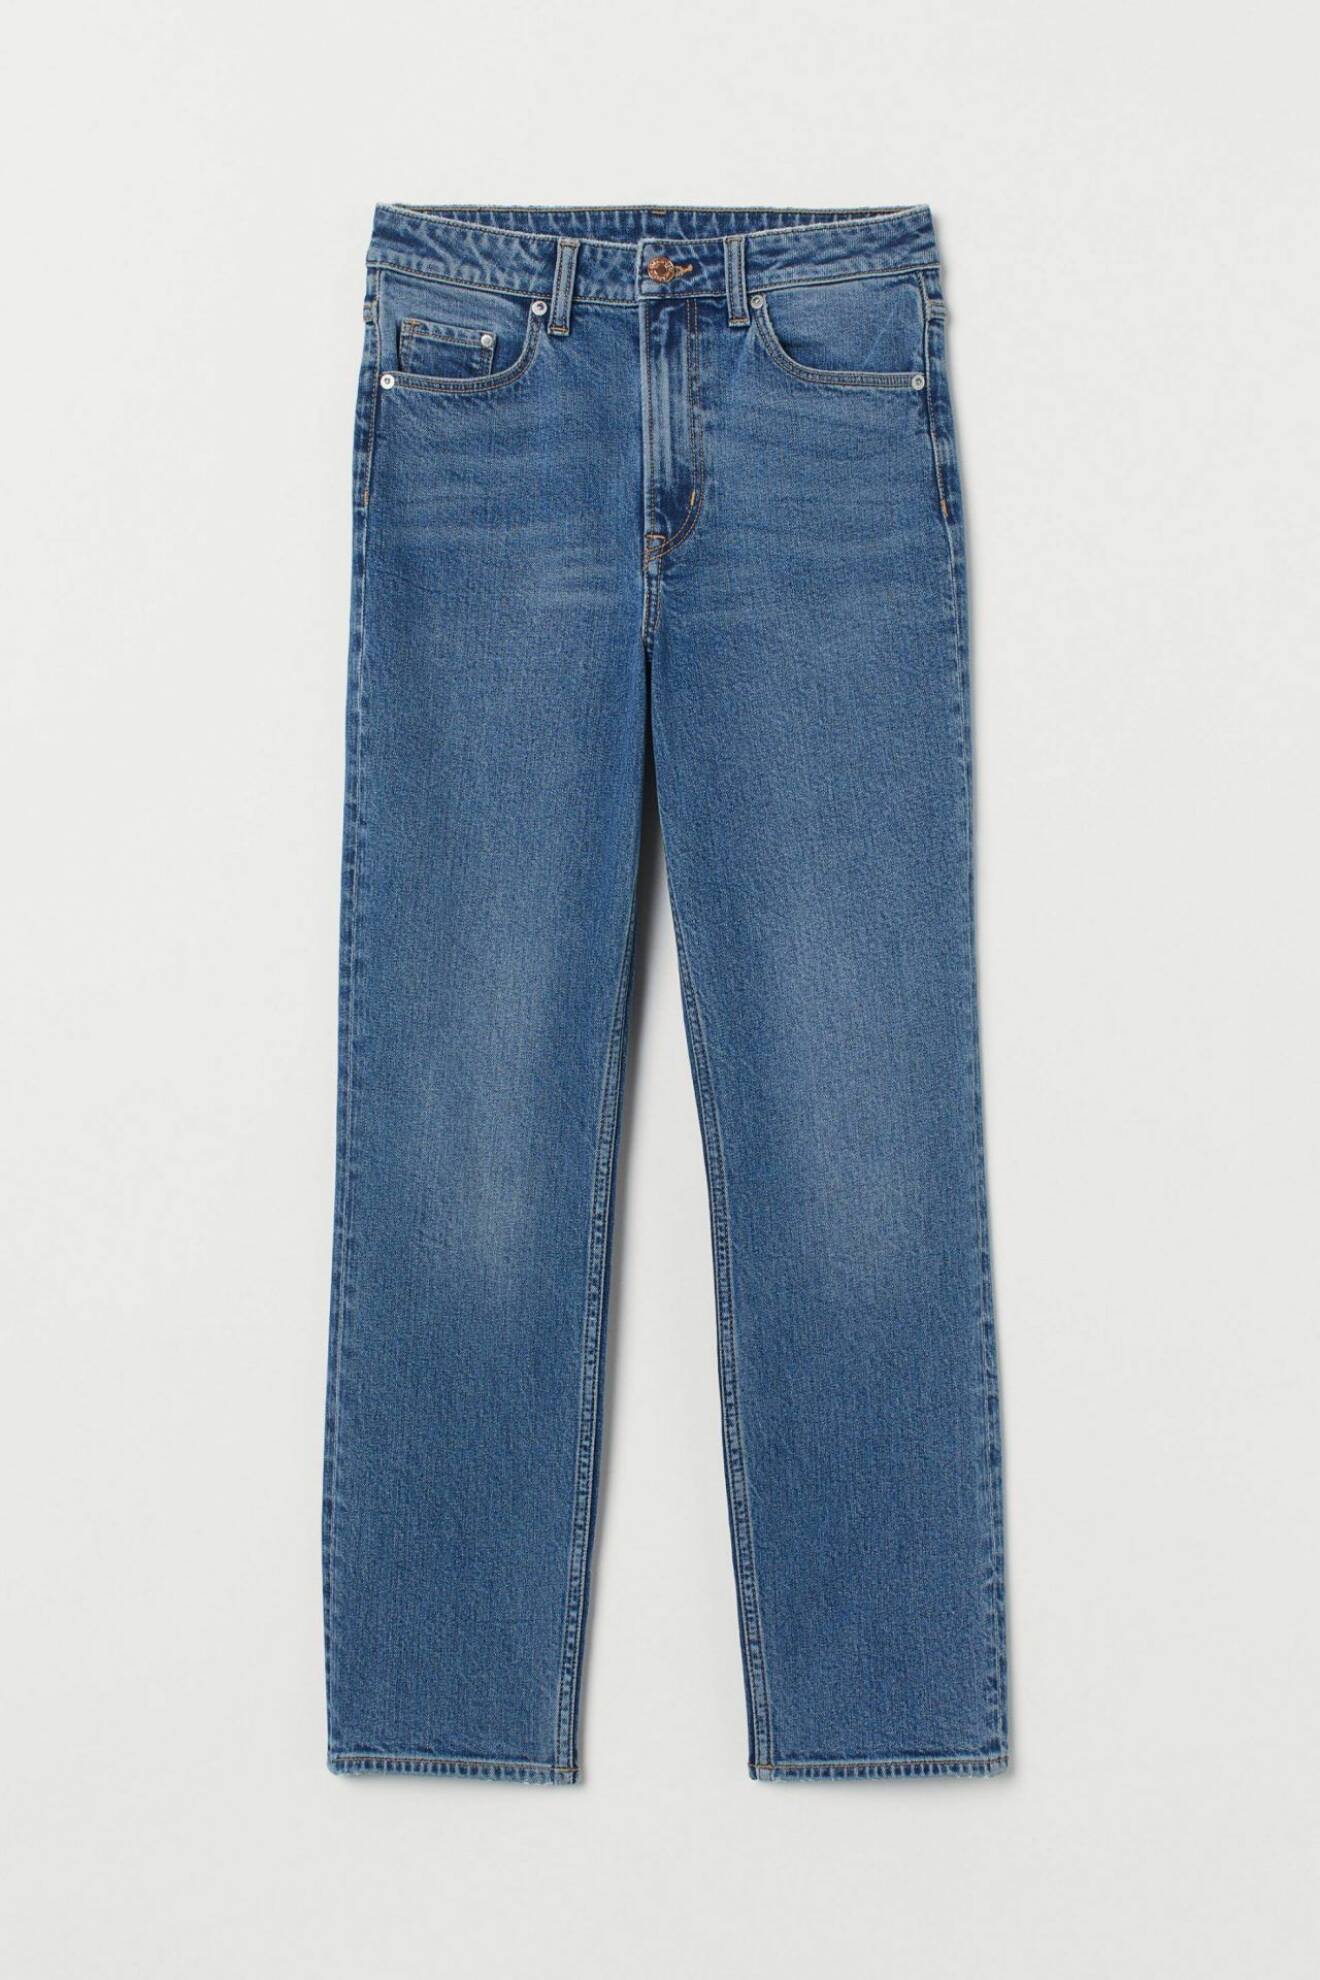 Jeans från H&M